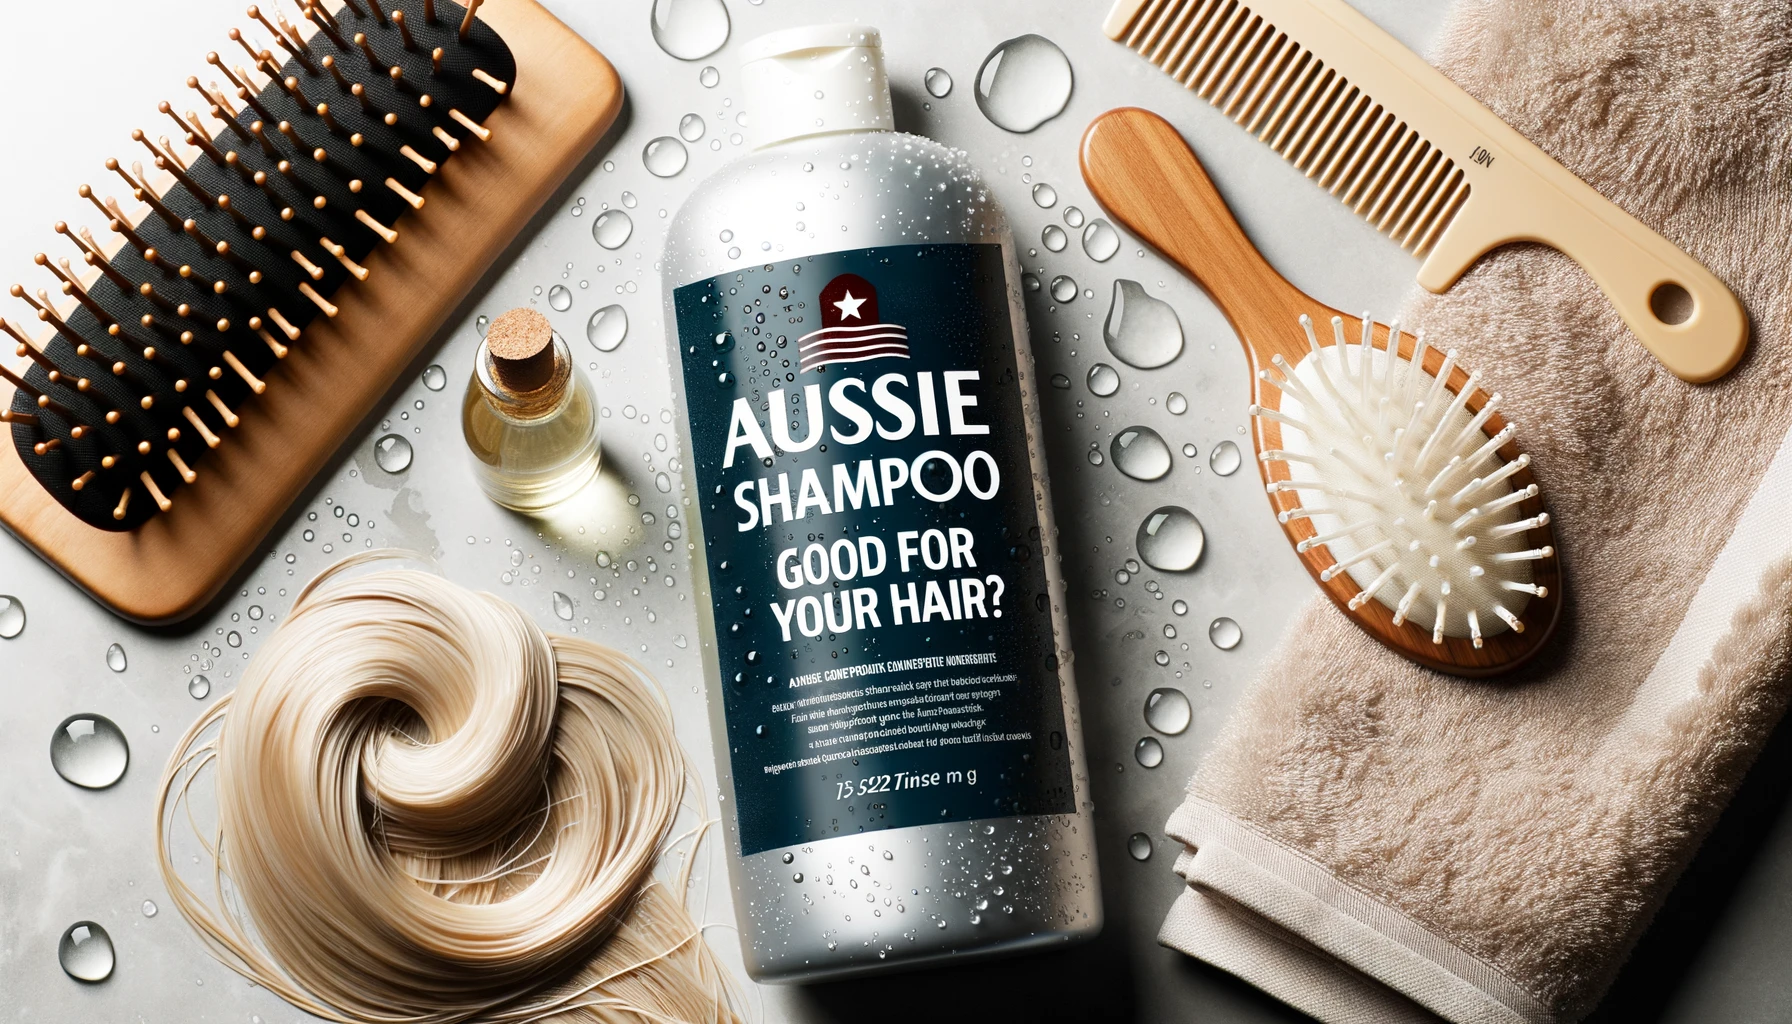 Photo of Aussie shampoo on a bathroom counter